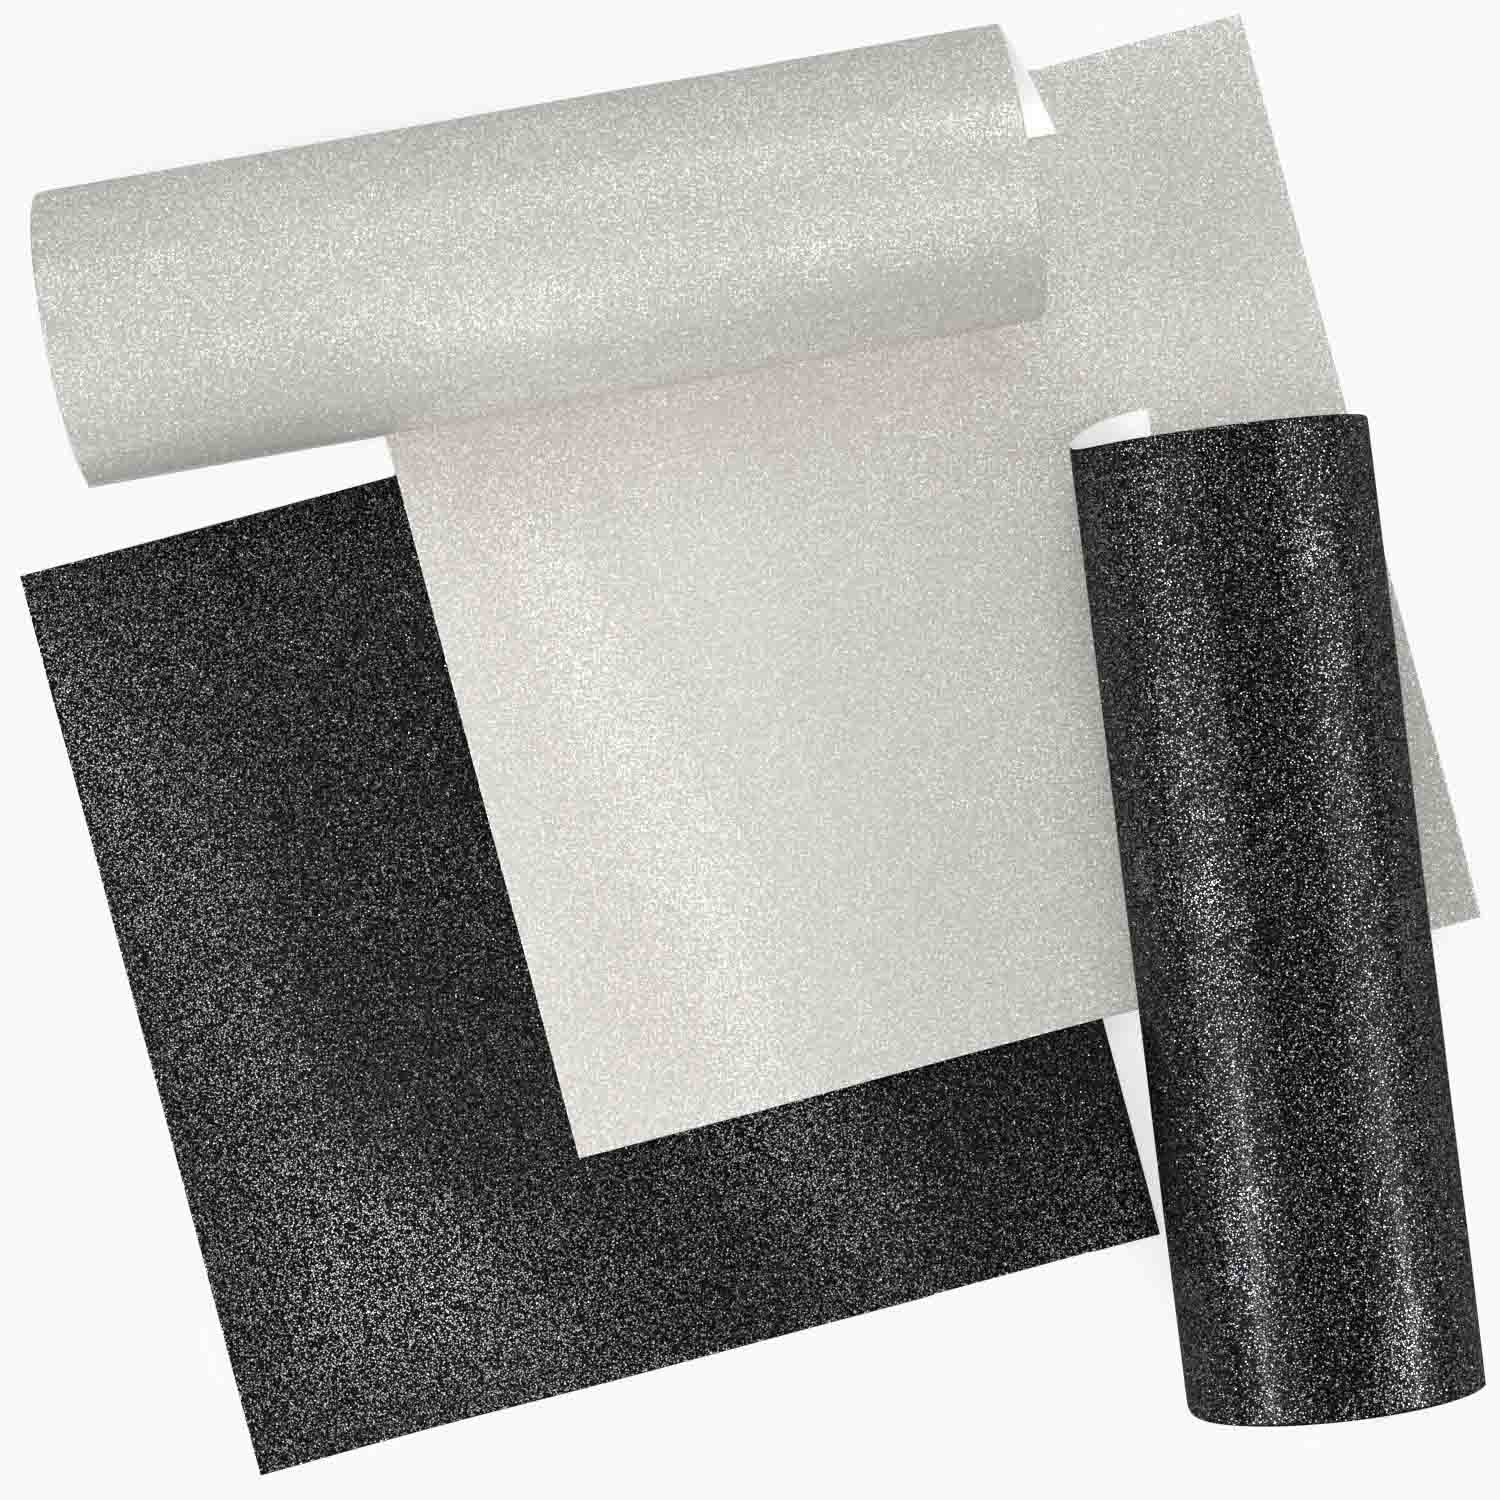 Blank Shimmer Paper, Silver Metallic